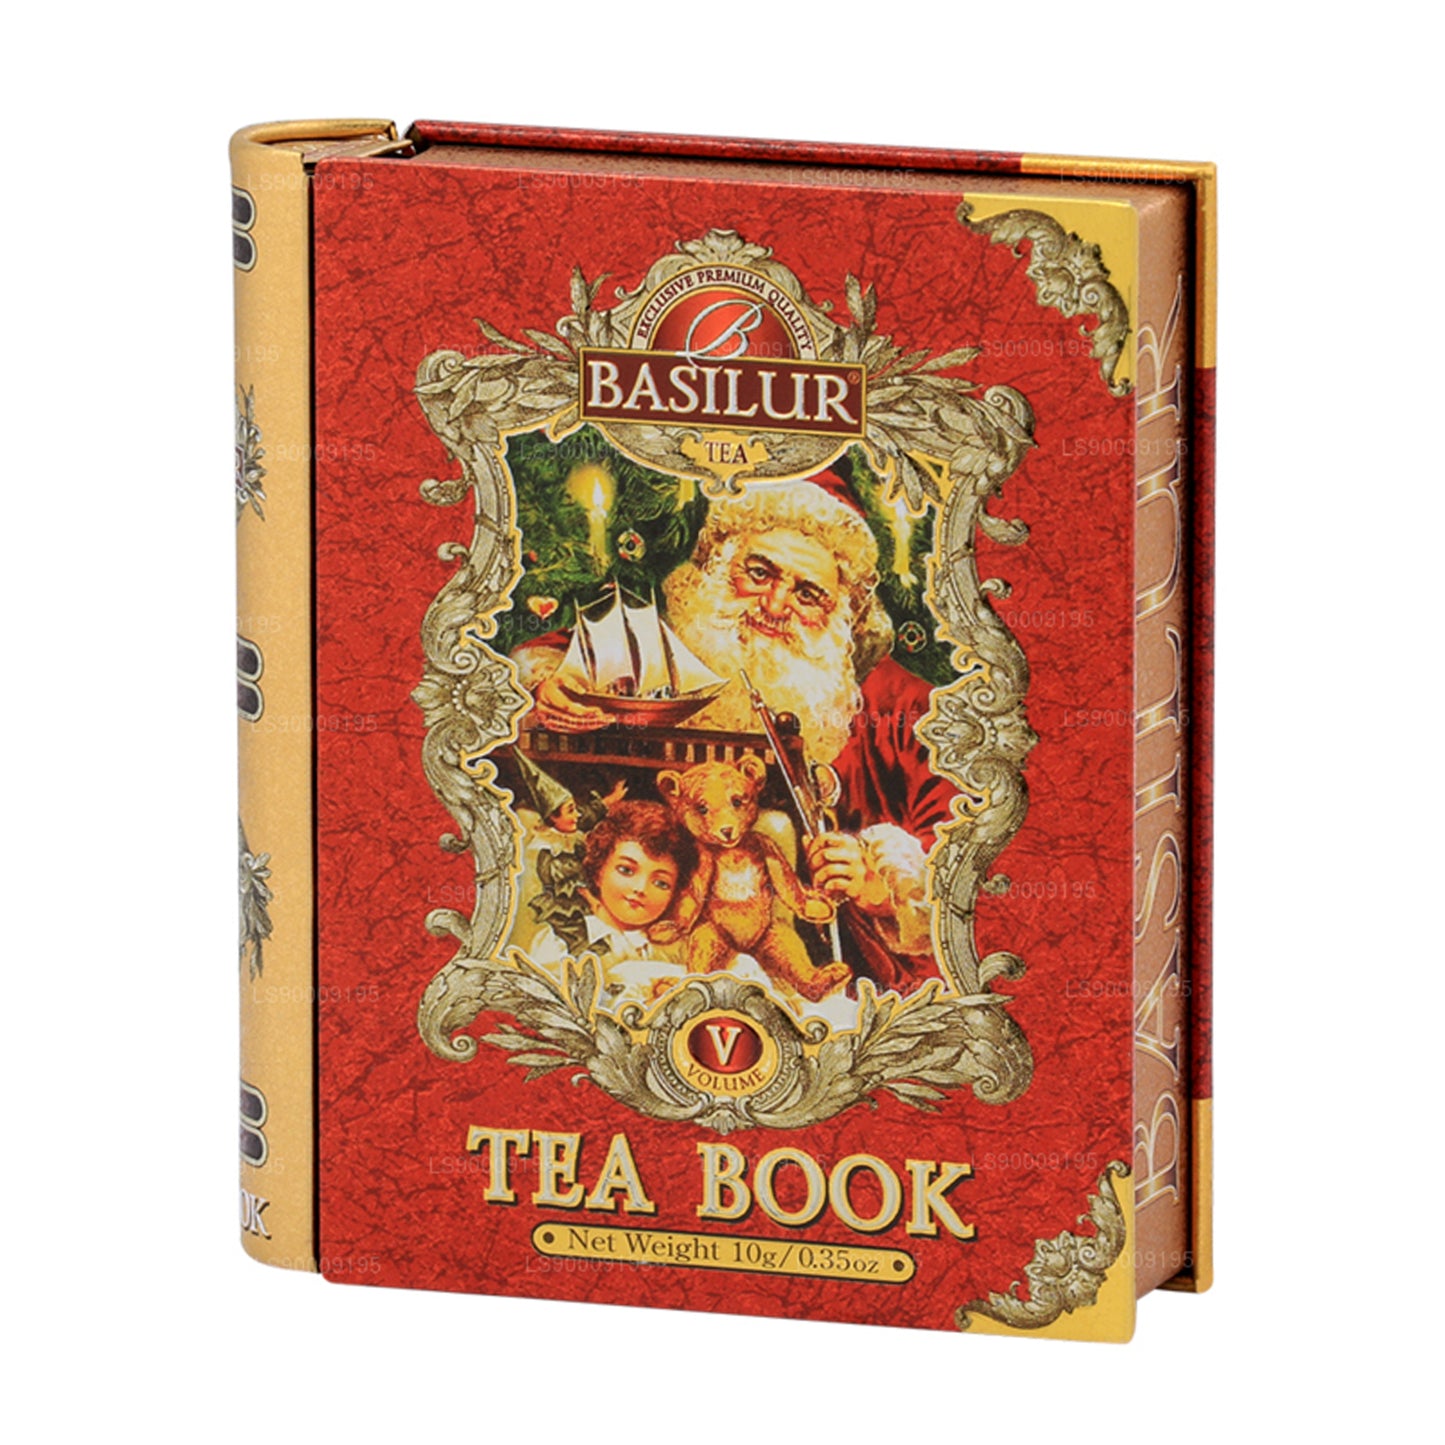 Basilur "Miniature Tea Book - Volume V - Red" (10g) Caddy